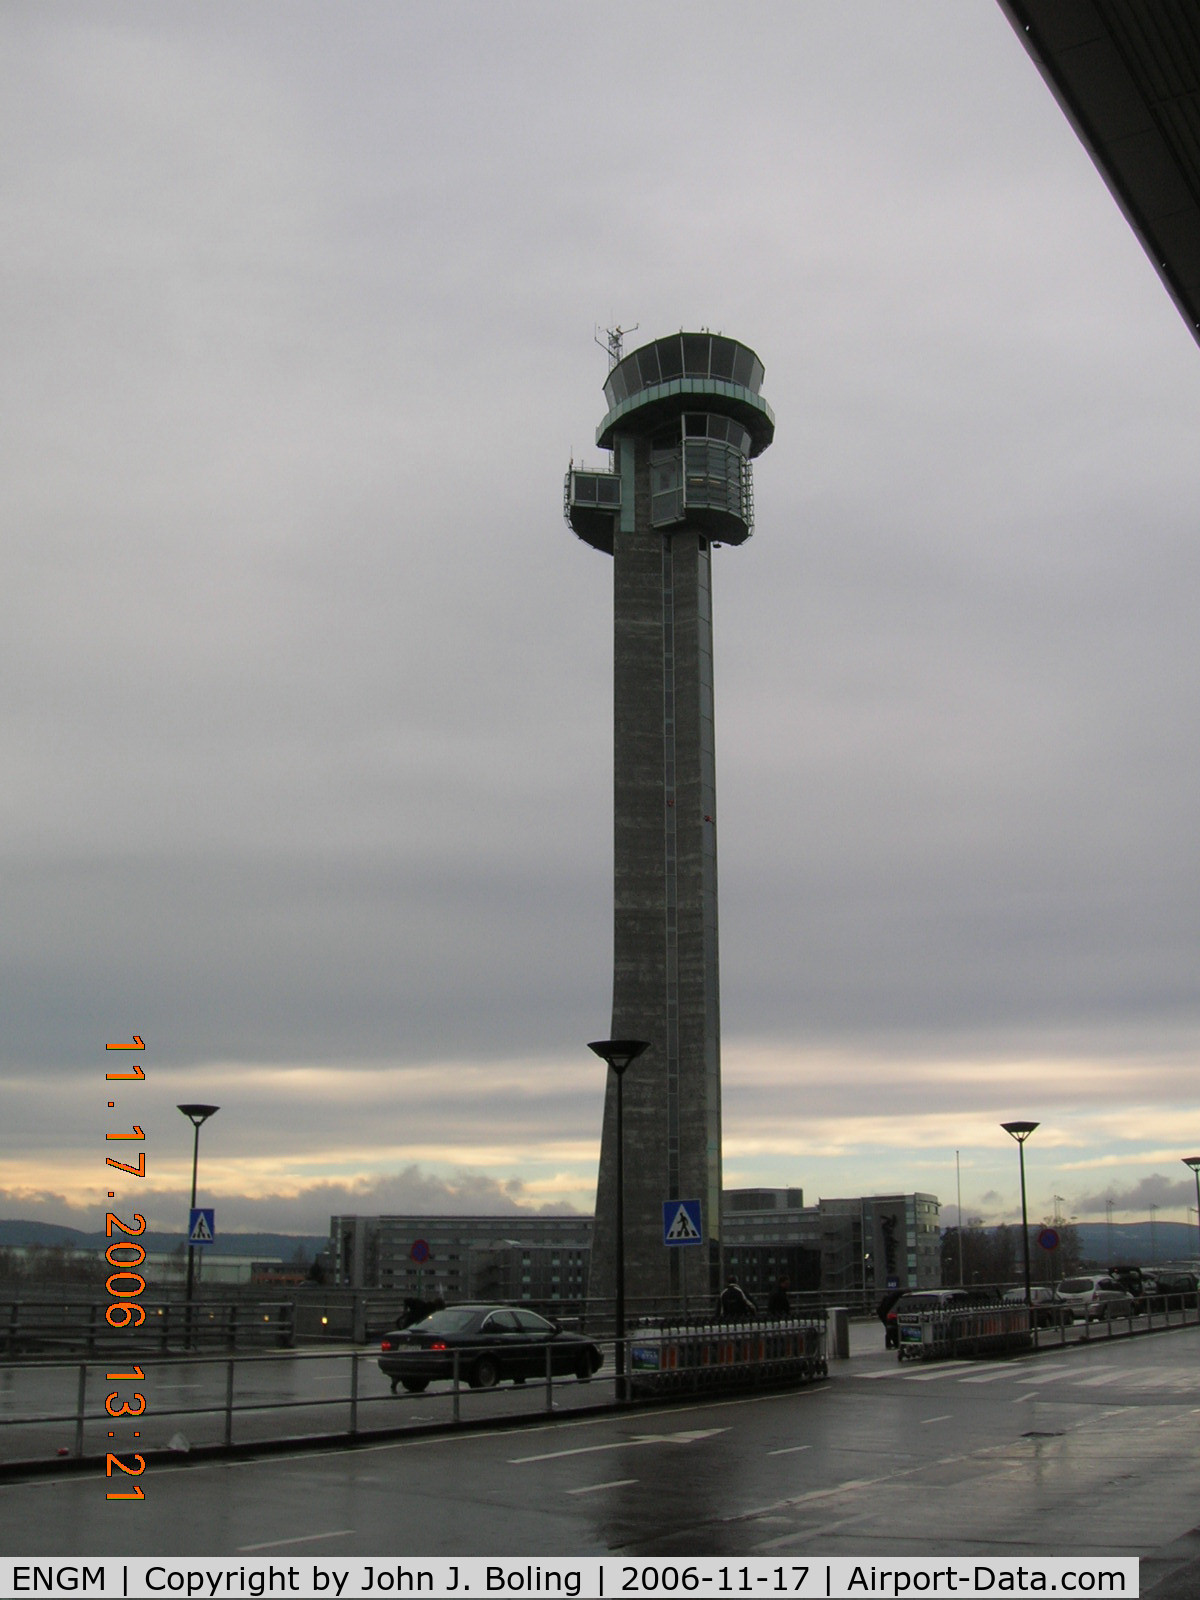 Oslo Airport, Gardermoen, Gardermoen (near Oslo), Akershus Norway (ENGM) - Tower at Oslo, Norway (OSL)